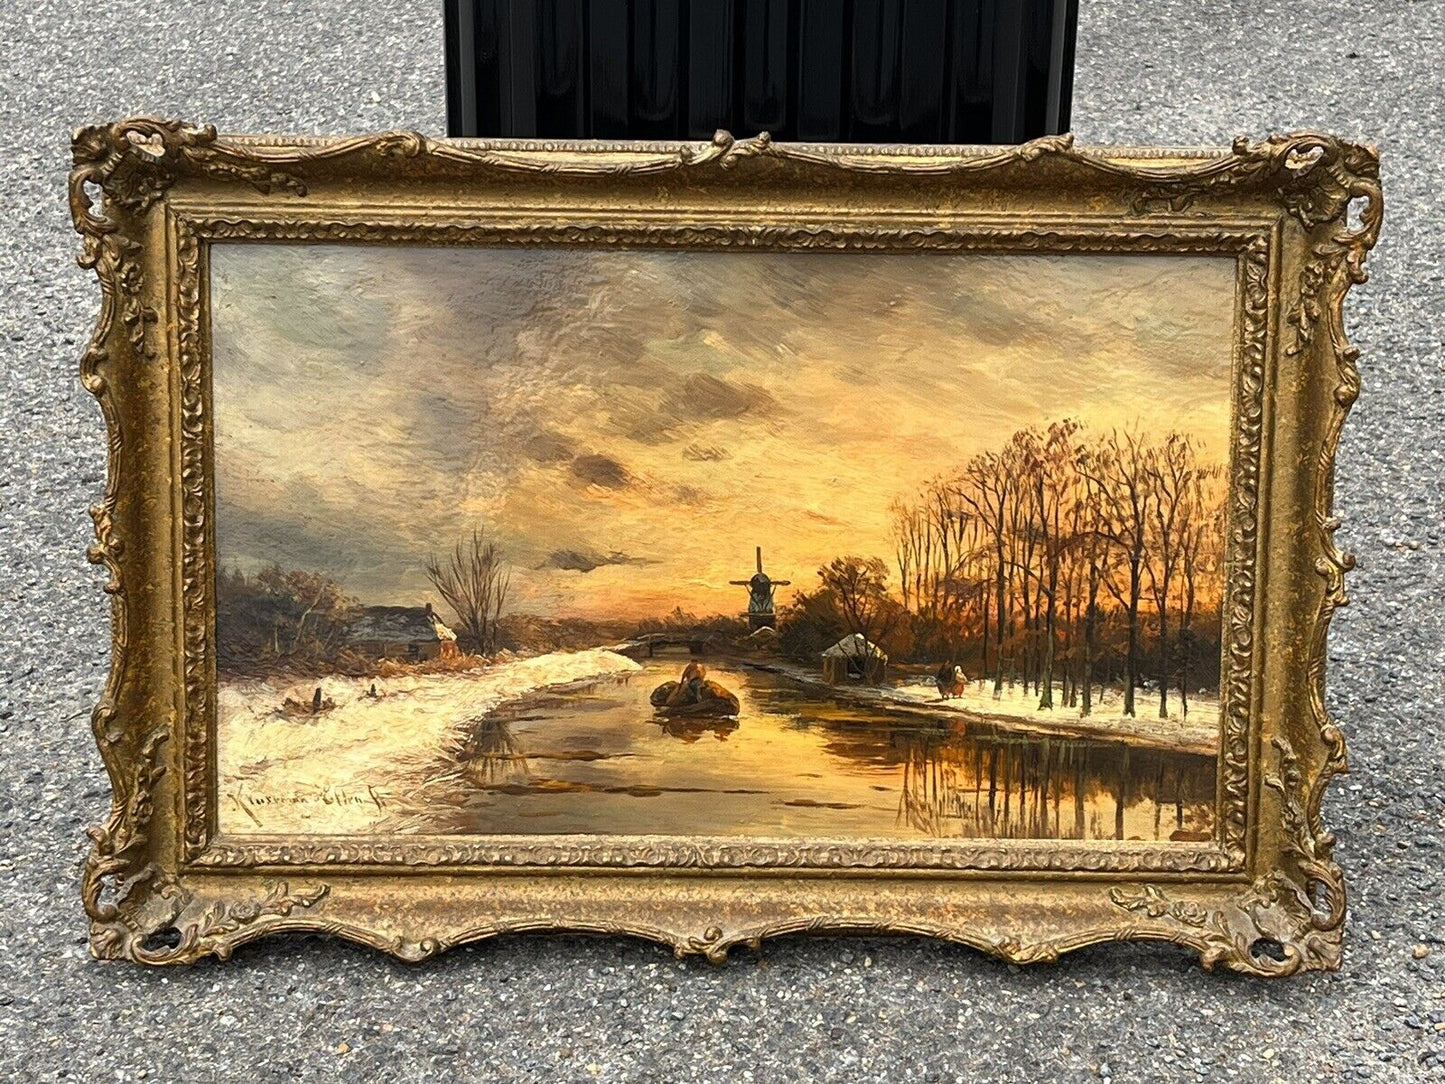 Hendrik Dirk Kruseman vanElten(Dutch, 1829-1904) A Winter Landscape.